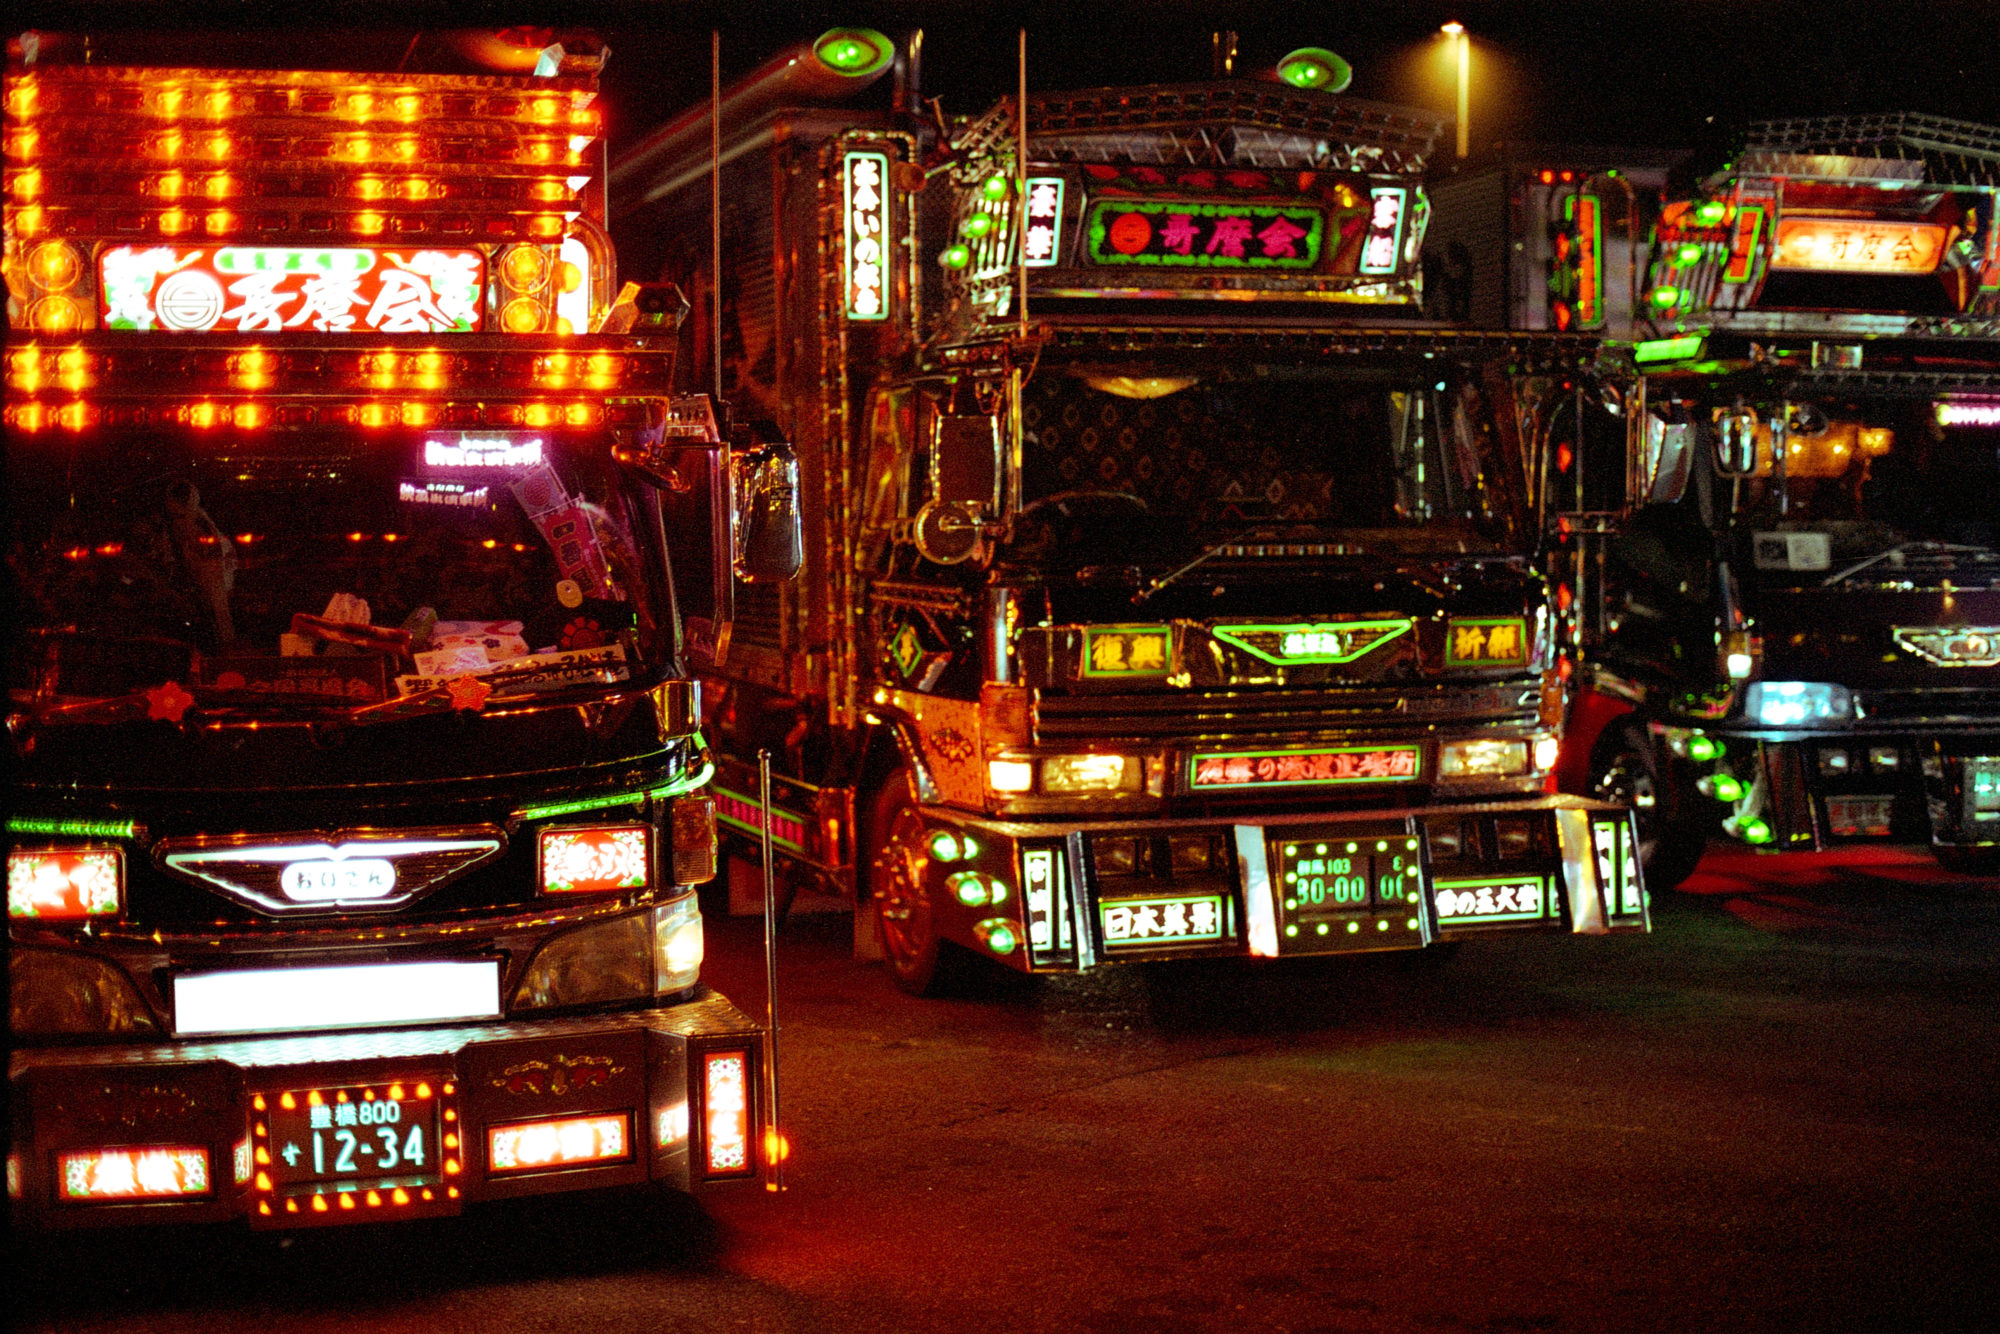 Decotora: The Japanese Art of Decorating Trucks